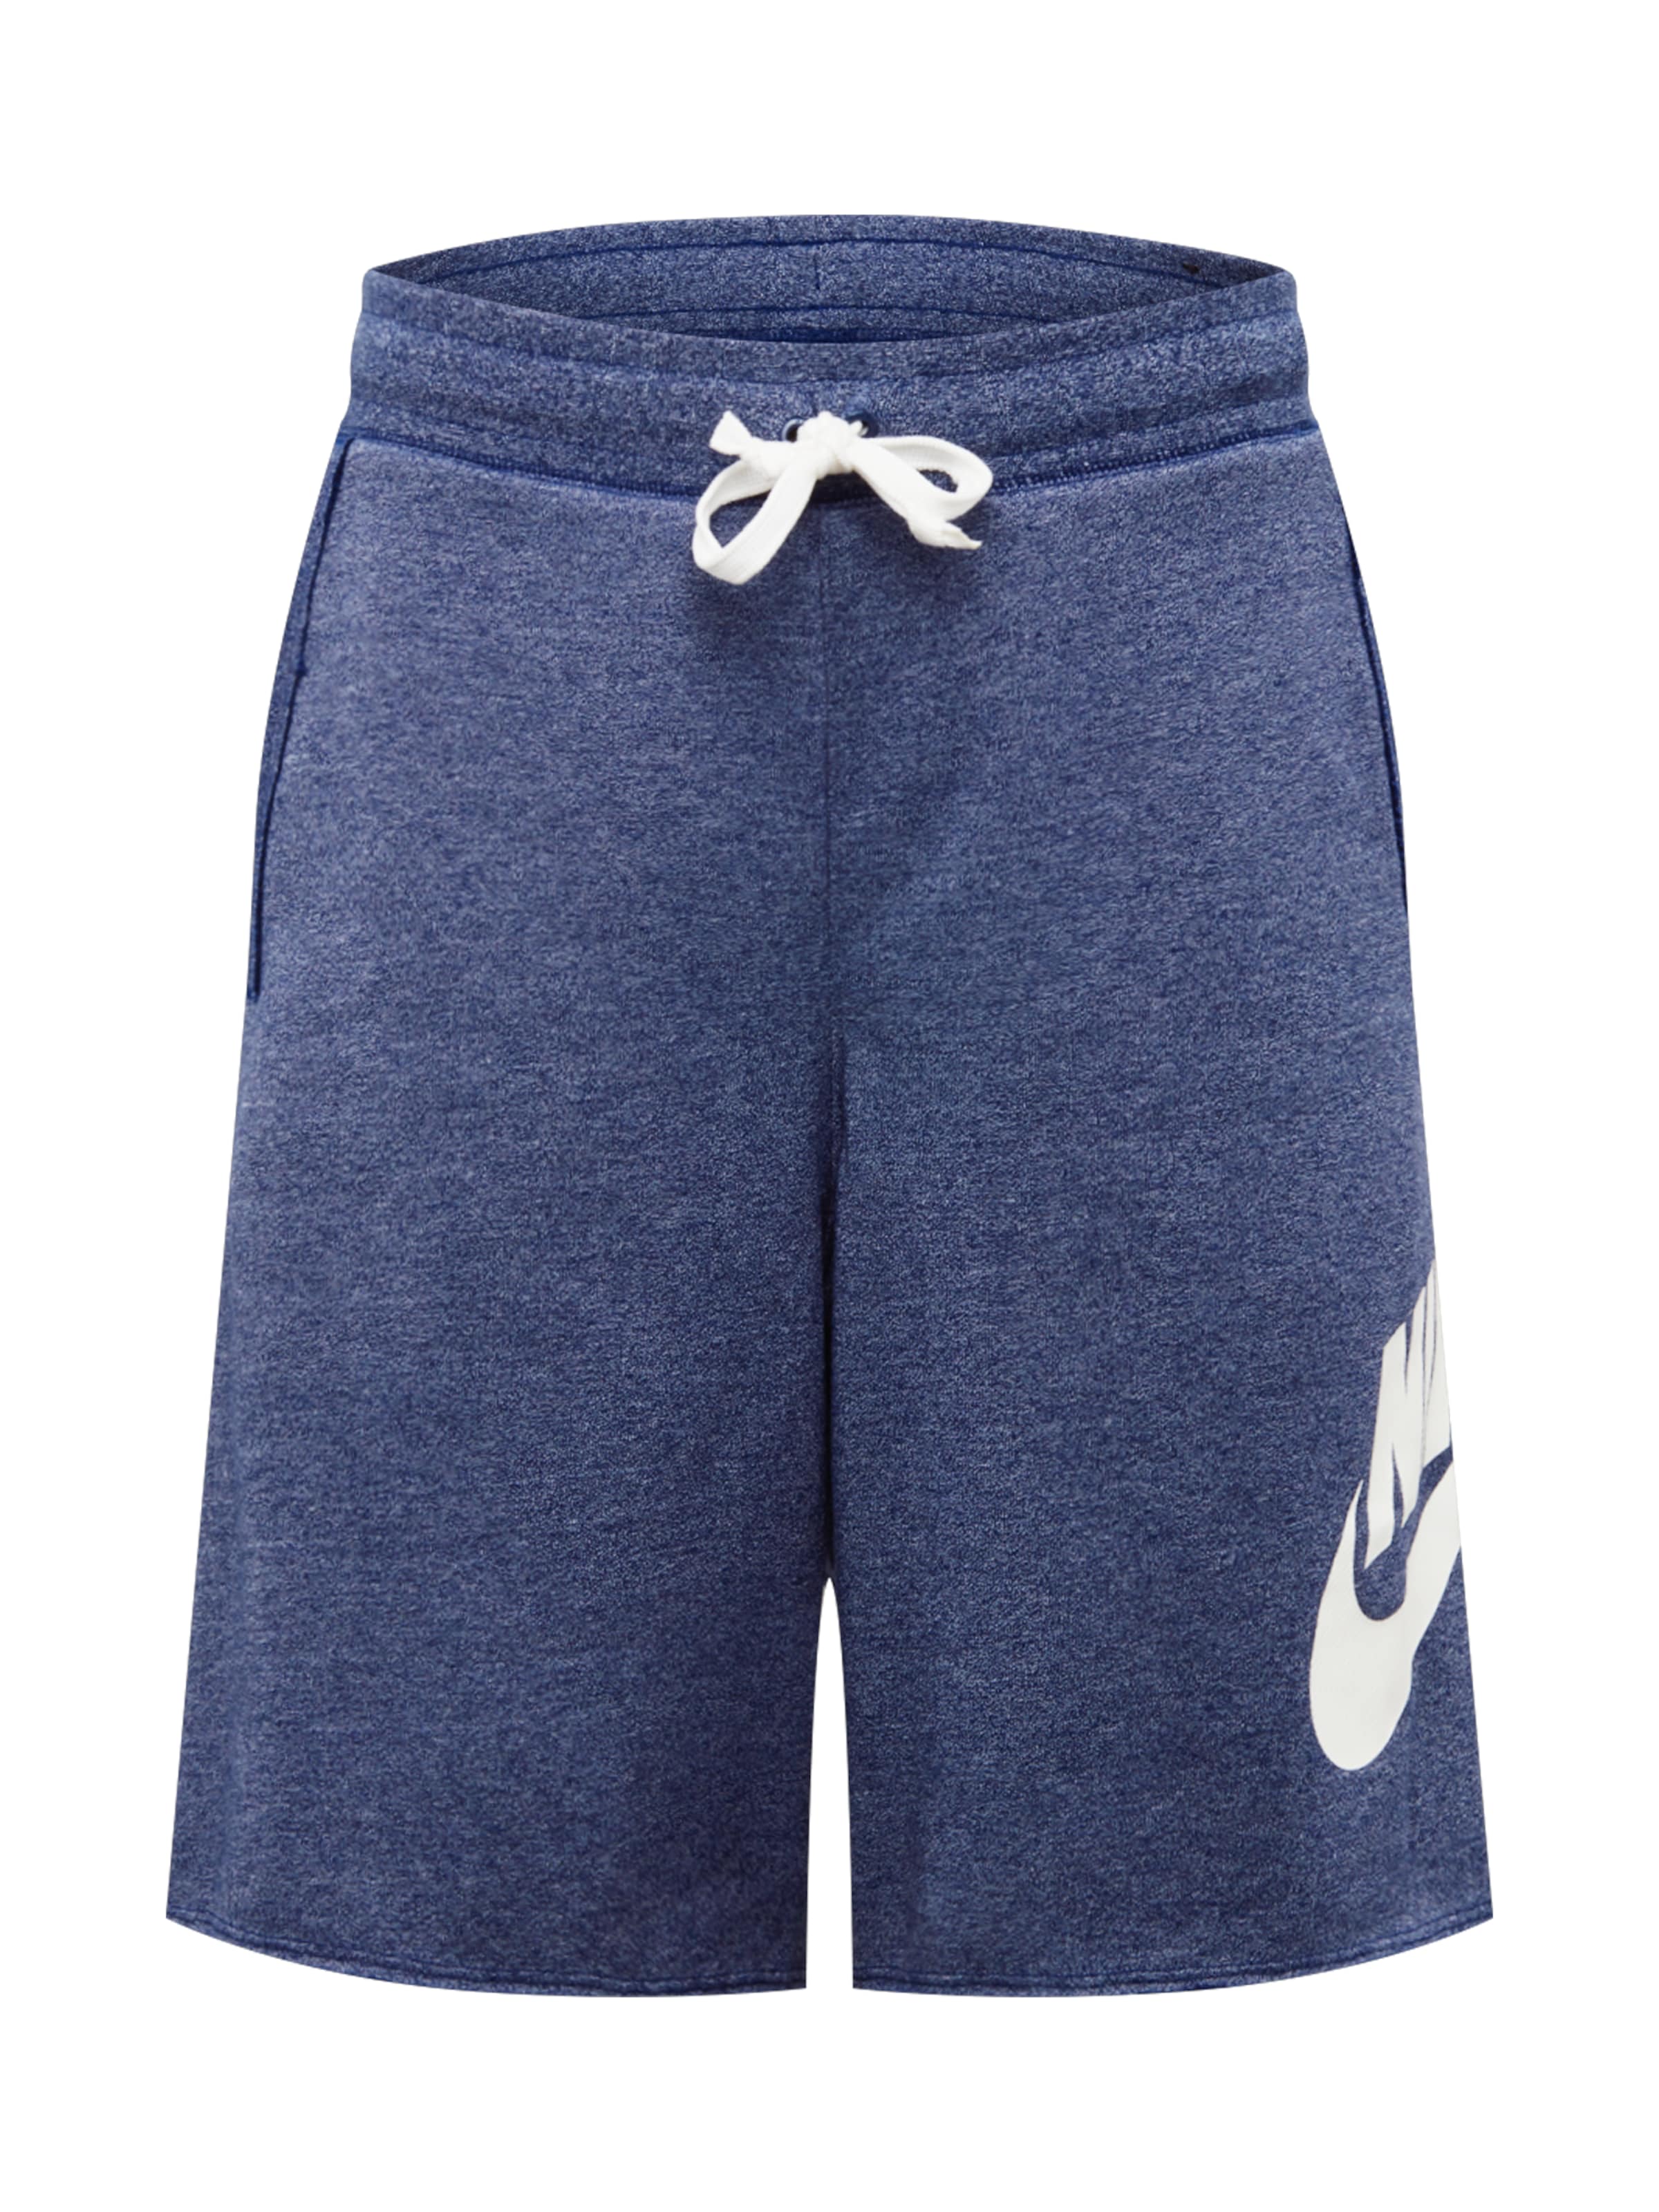 Abbigliamento Uomo Nike Sportswear Pantaloni in Blu Sfumato 